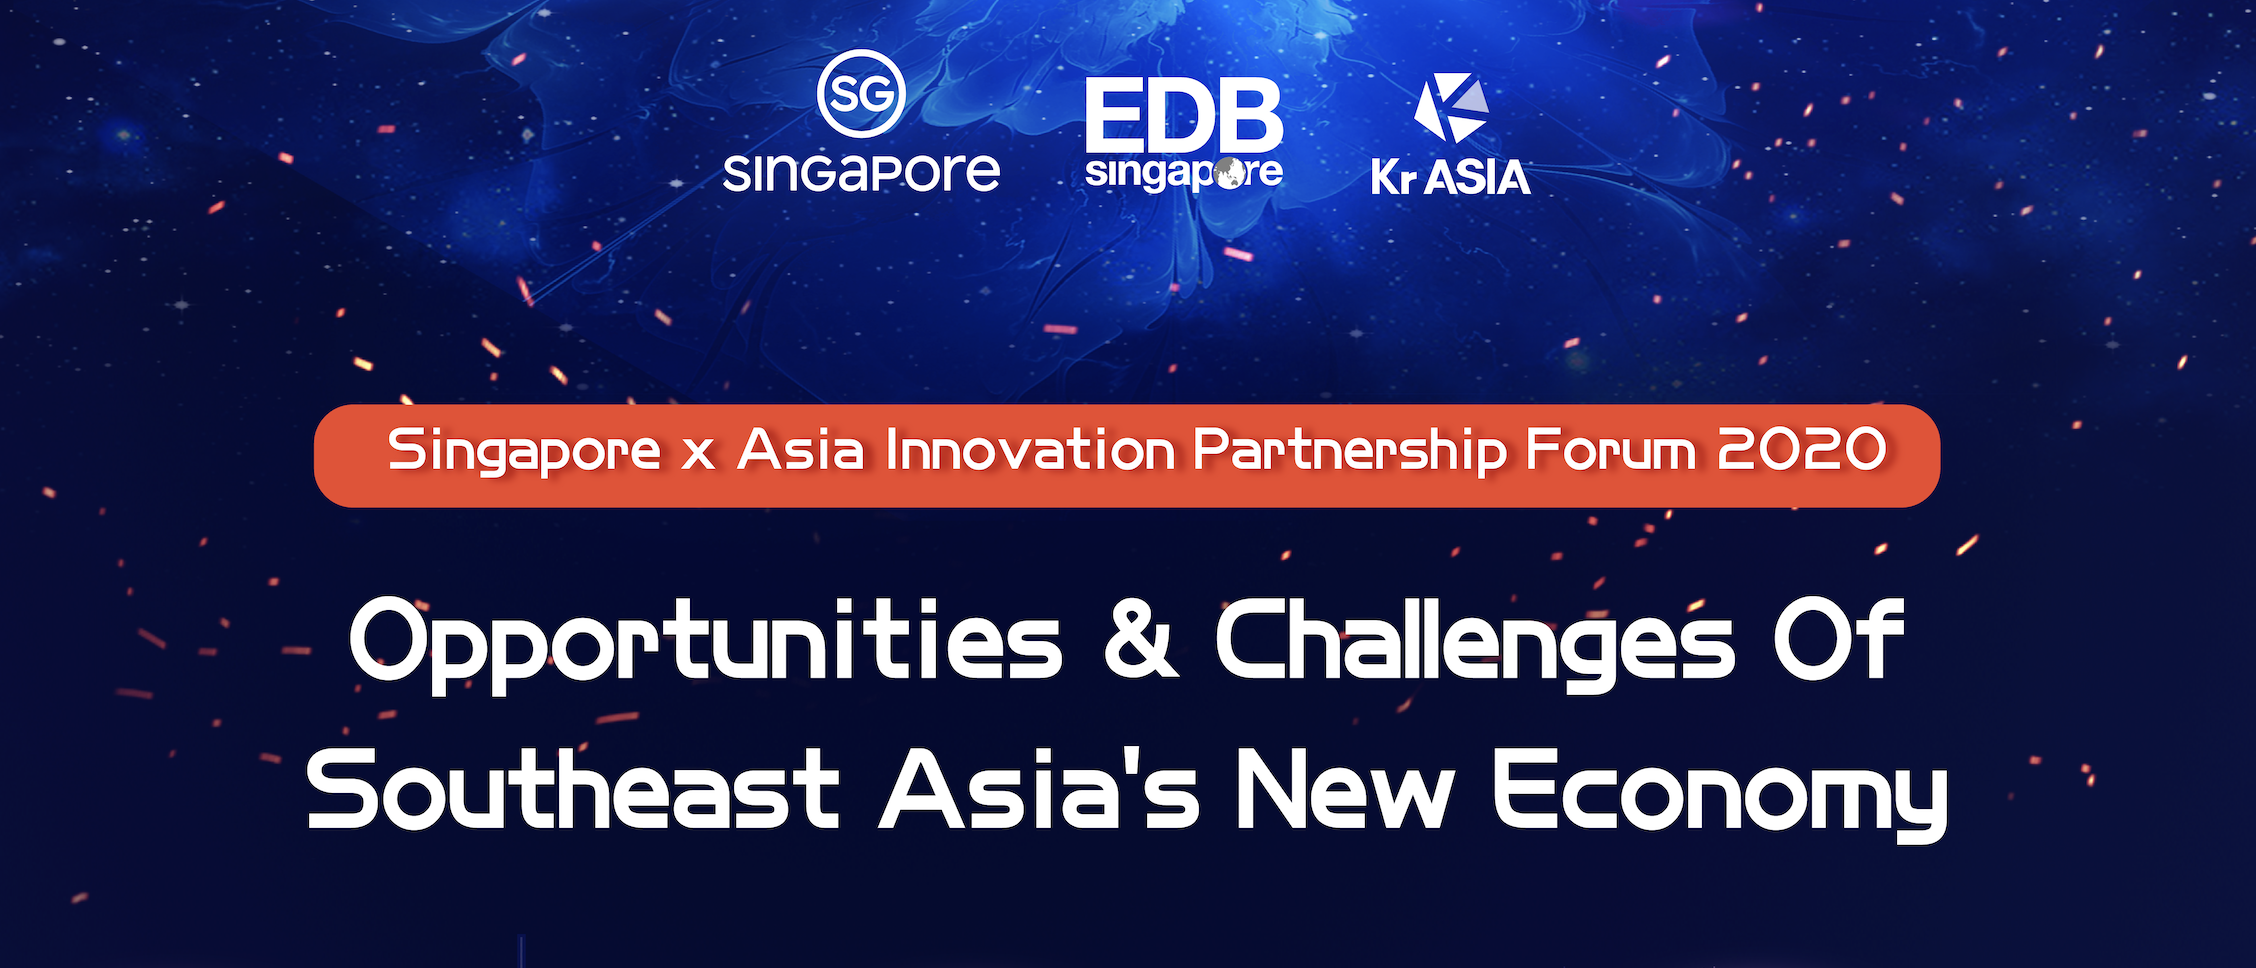 The future of the Southeast Asian economy | Singapore x Asia Innovation Partnership Forum 2020